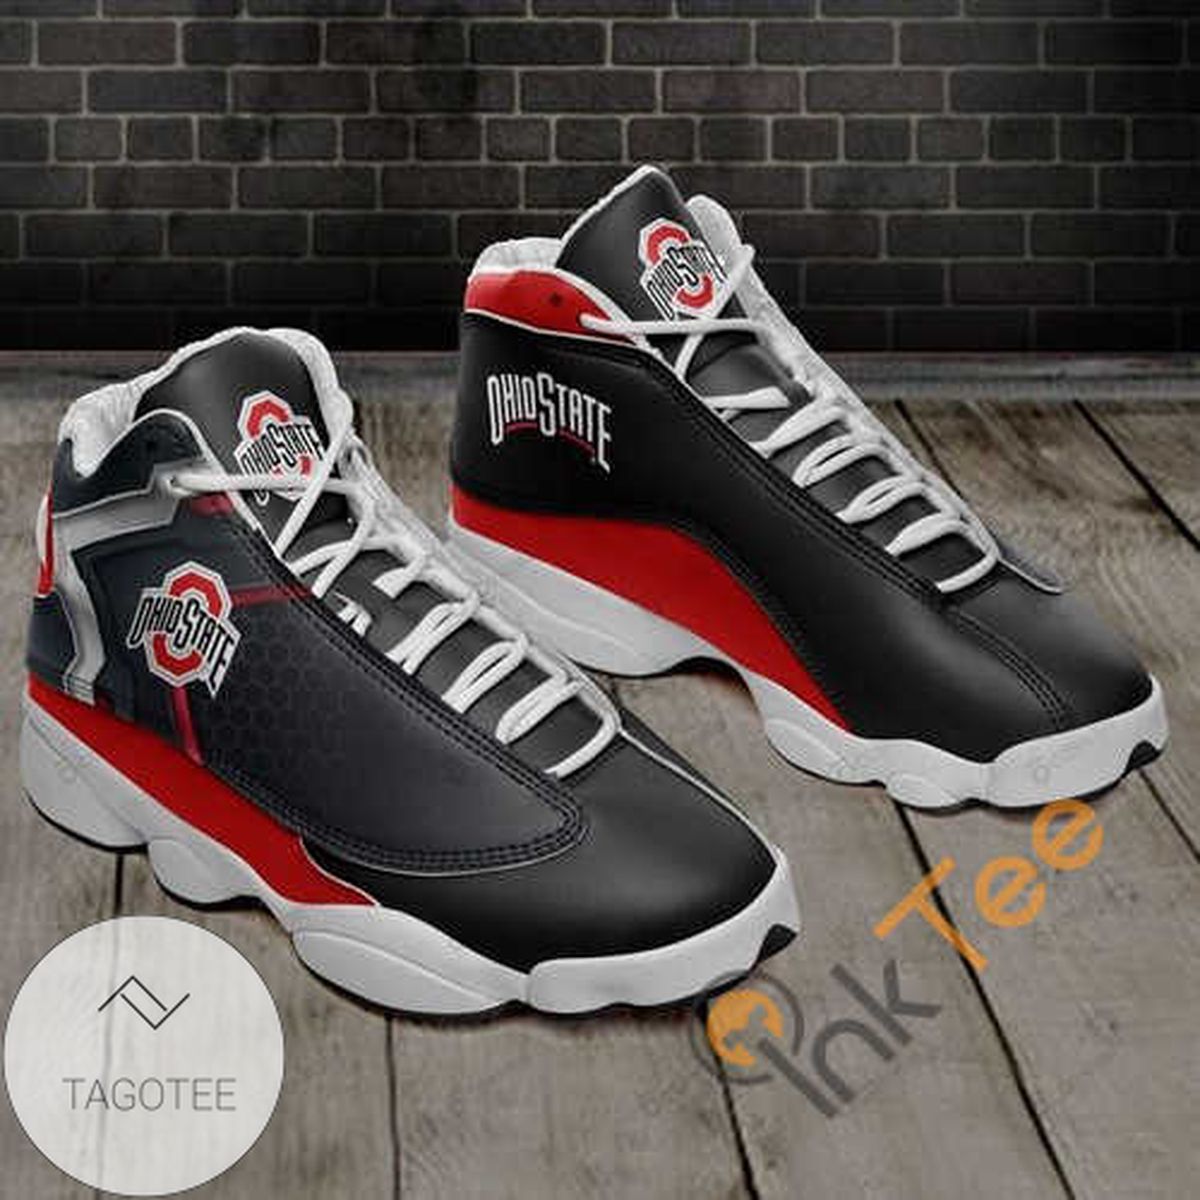 Ohio State Buckeyes 13 Personalized Air Jordan 13 Shoes Sneakers